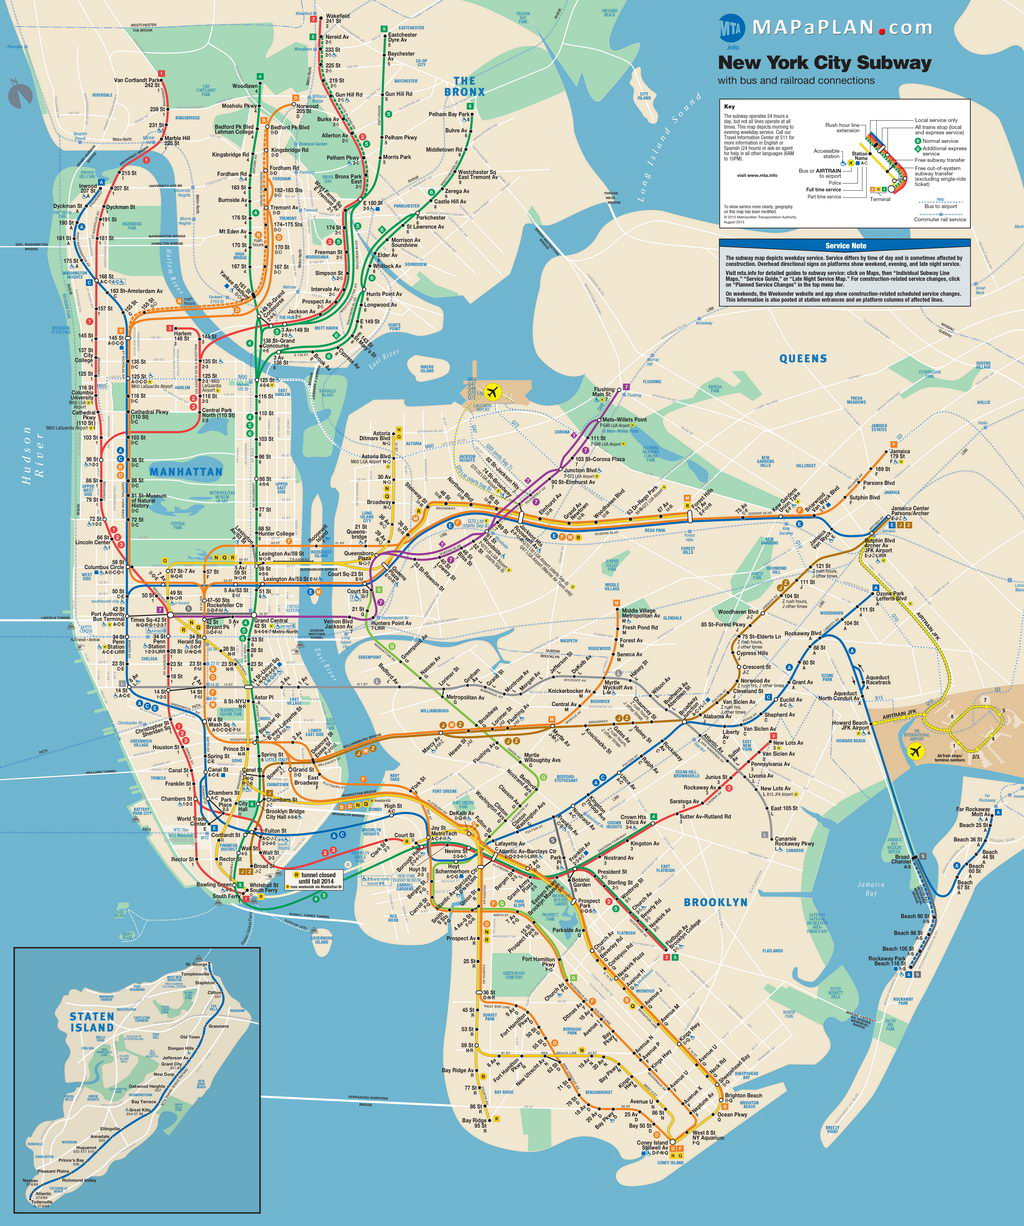 Maps Of New York Top Tourist Attractions - Free, Printable - Printable New York City Subway Map